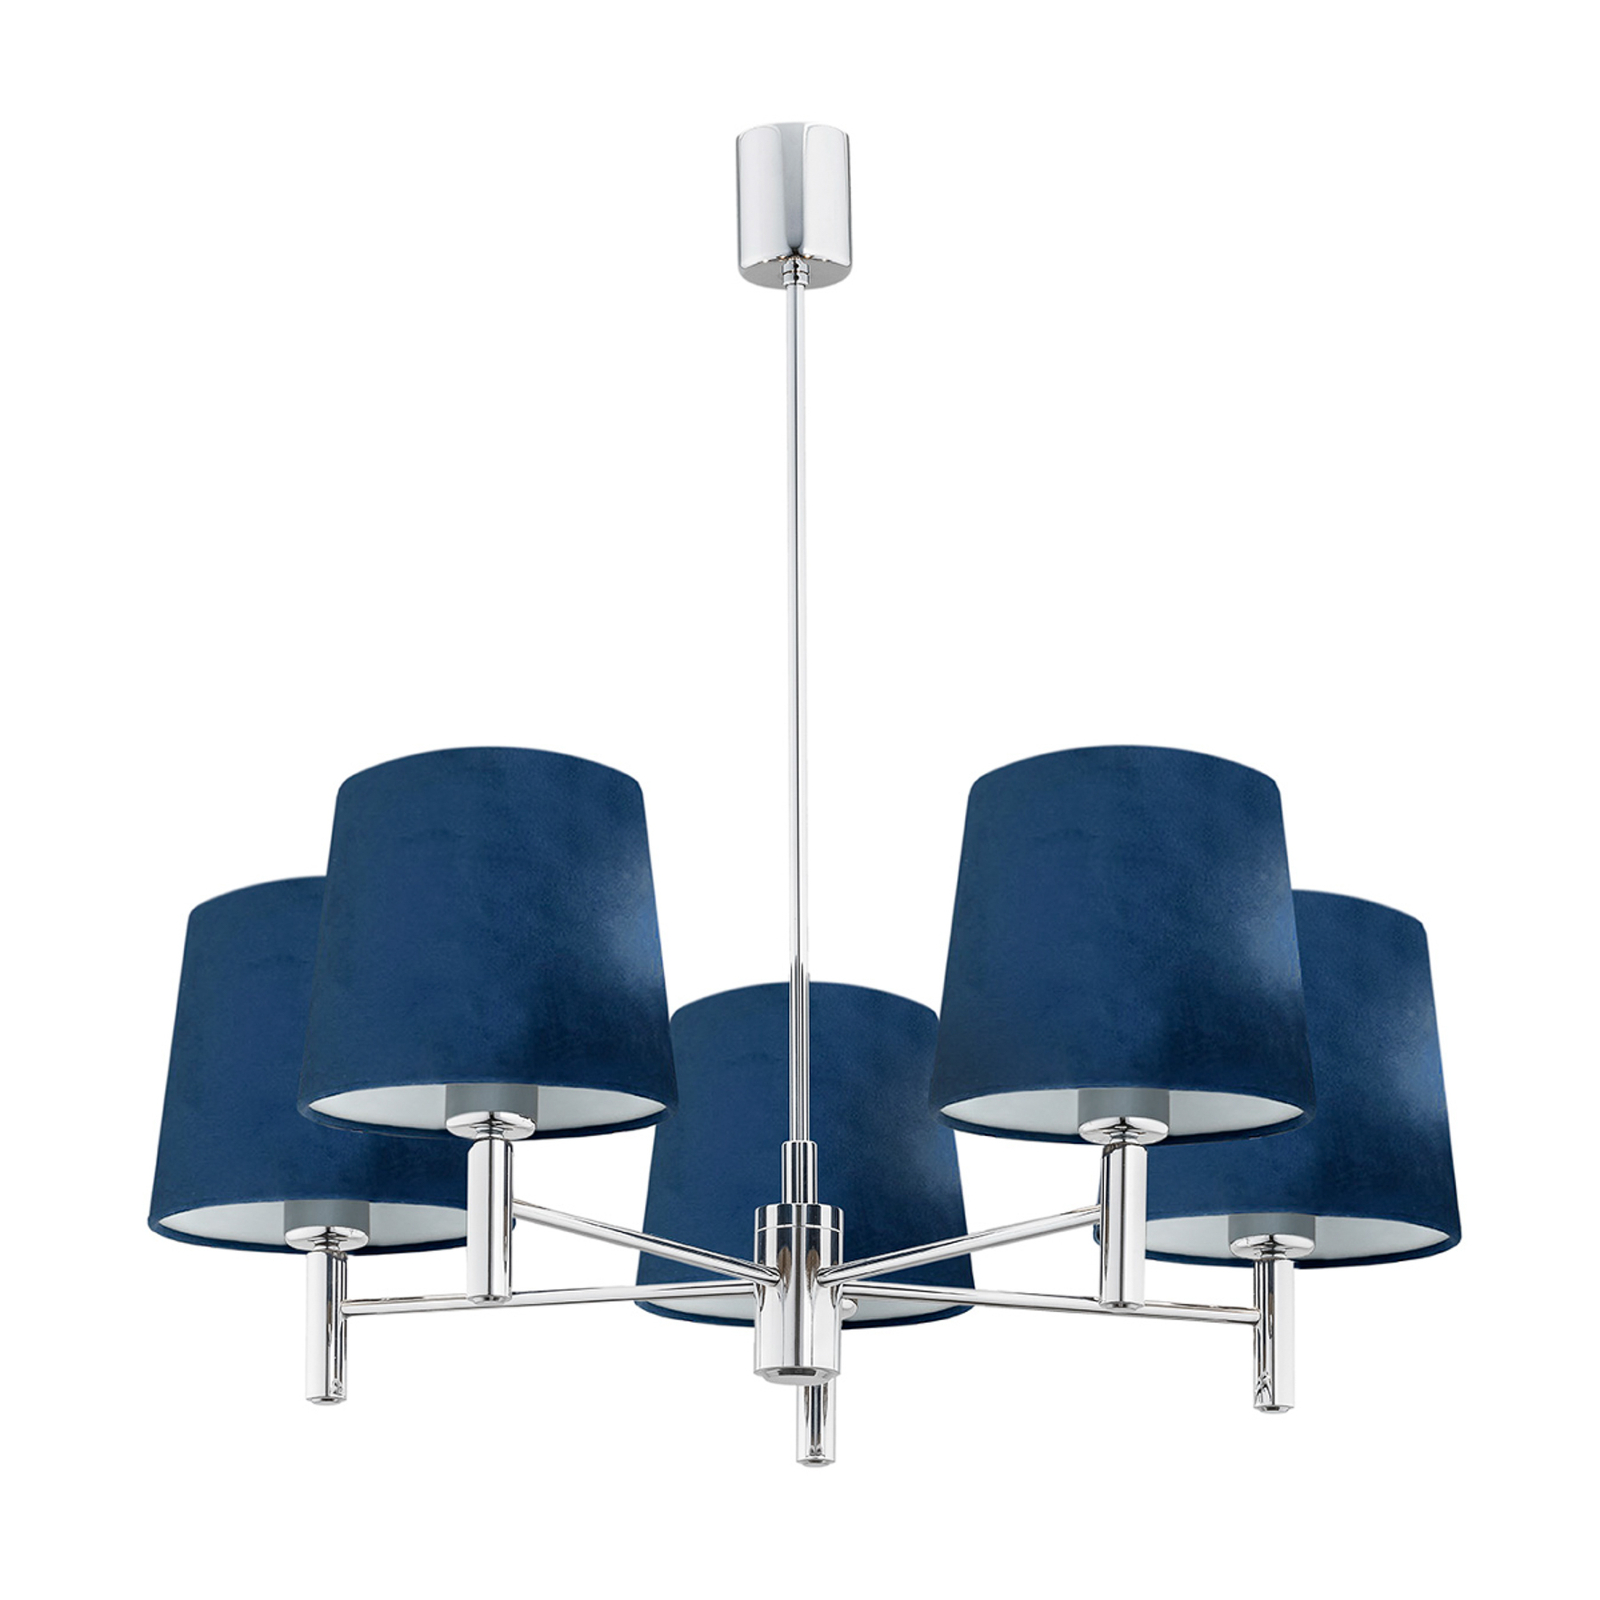 Hanglamp Bono, 5-lamps, chroom/blauw